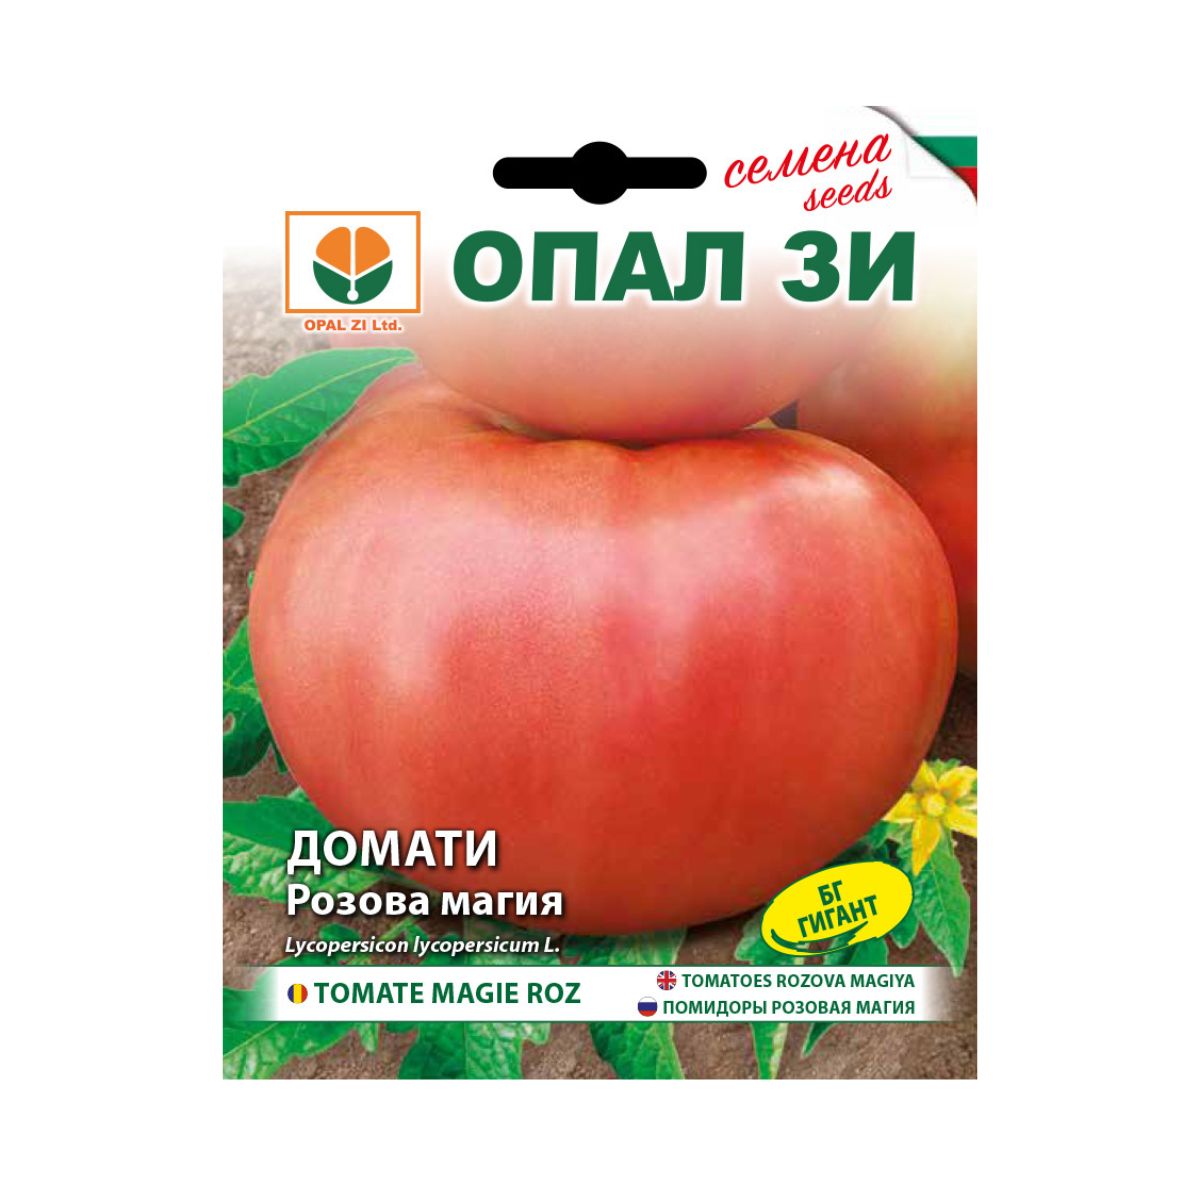 Tomate - Seminte de tomate Rozova magia (Magie Roz), 0,2 grame OPAL, hectarul.ro